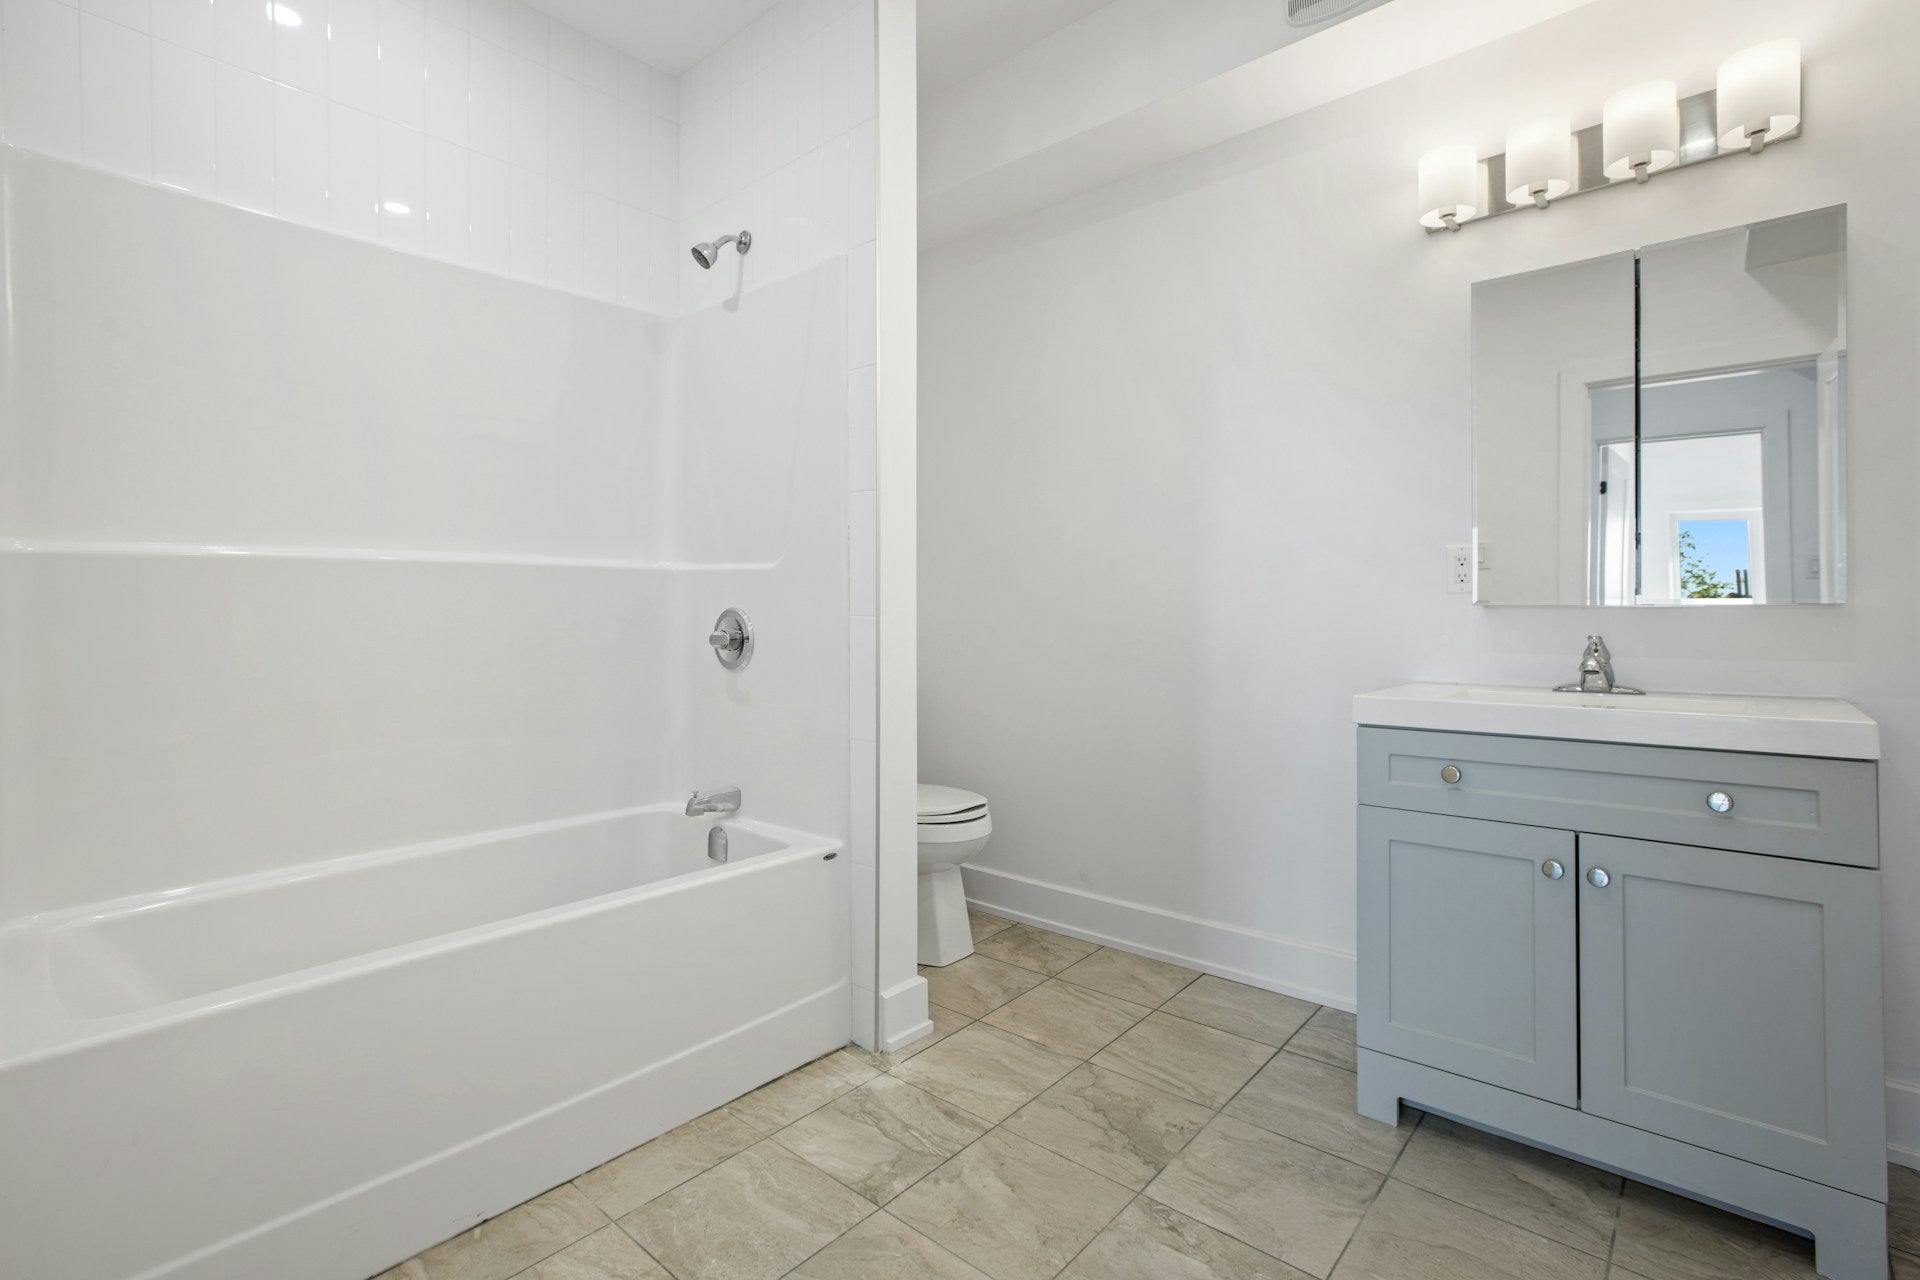 10 Best Bathroom Vanity Mirrors with Lights – HighEmporium.com